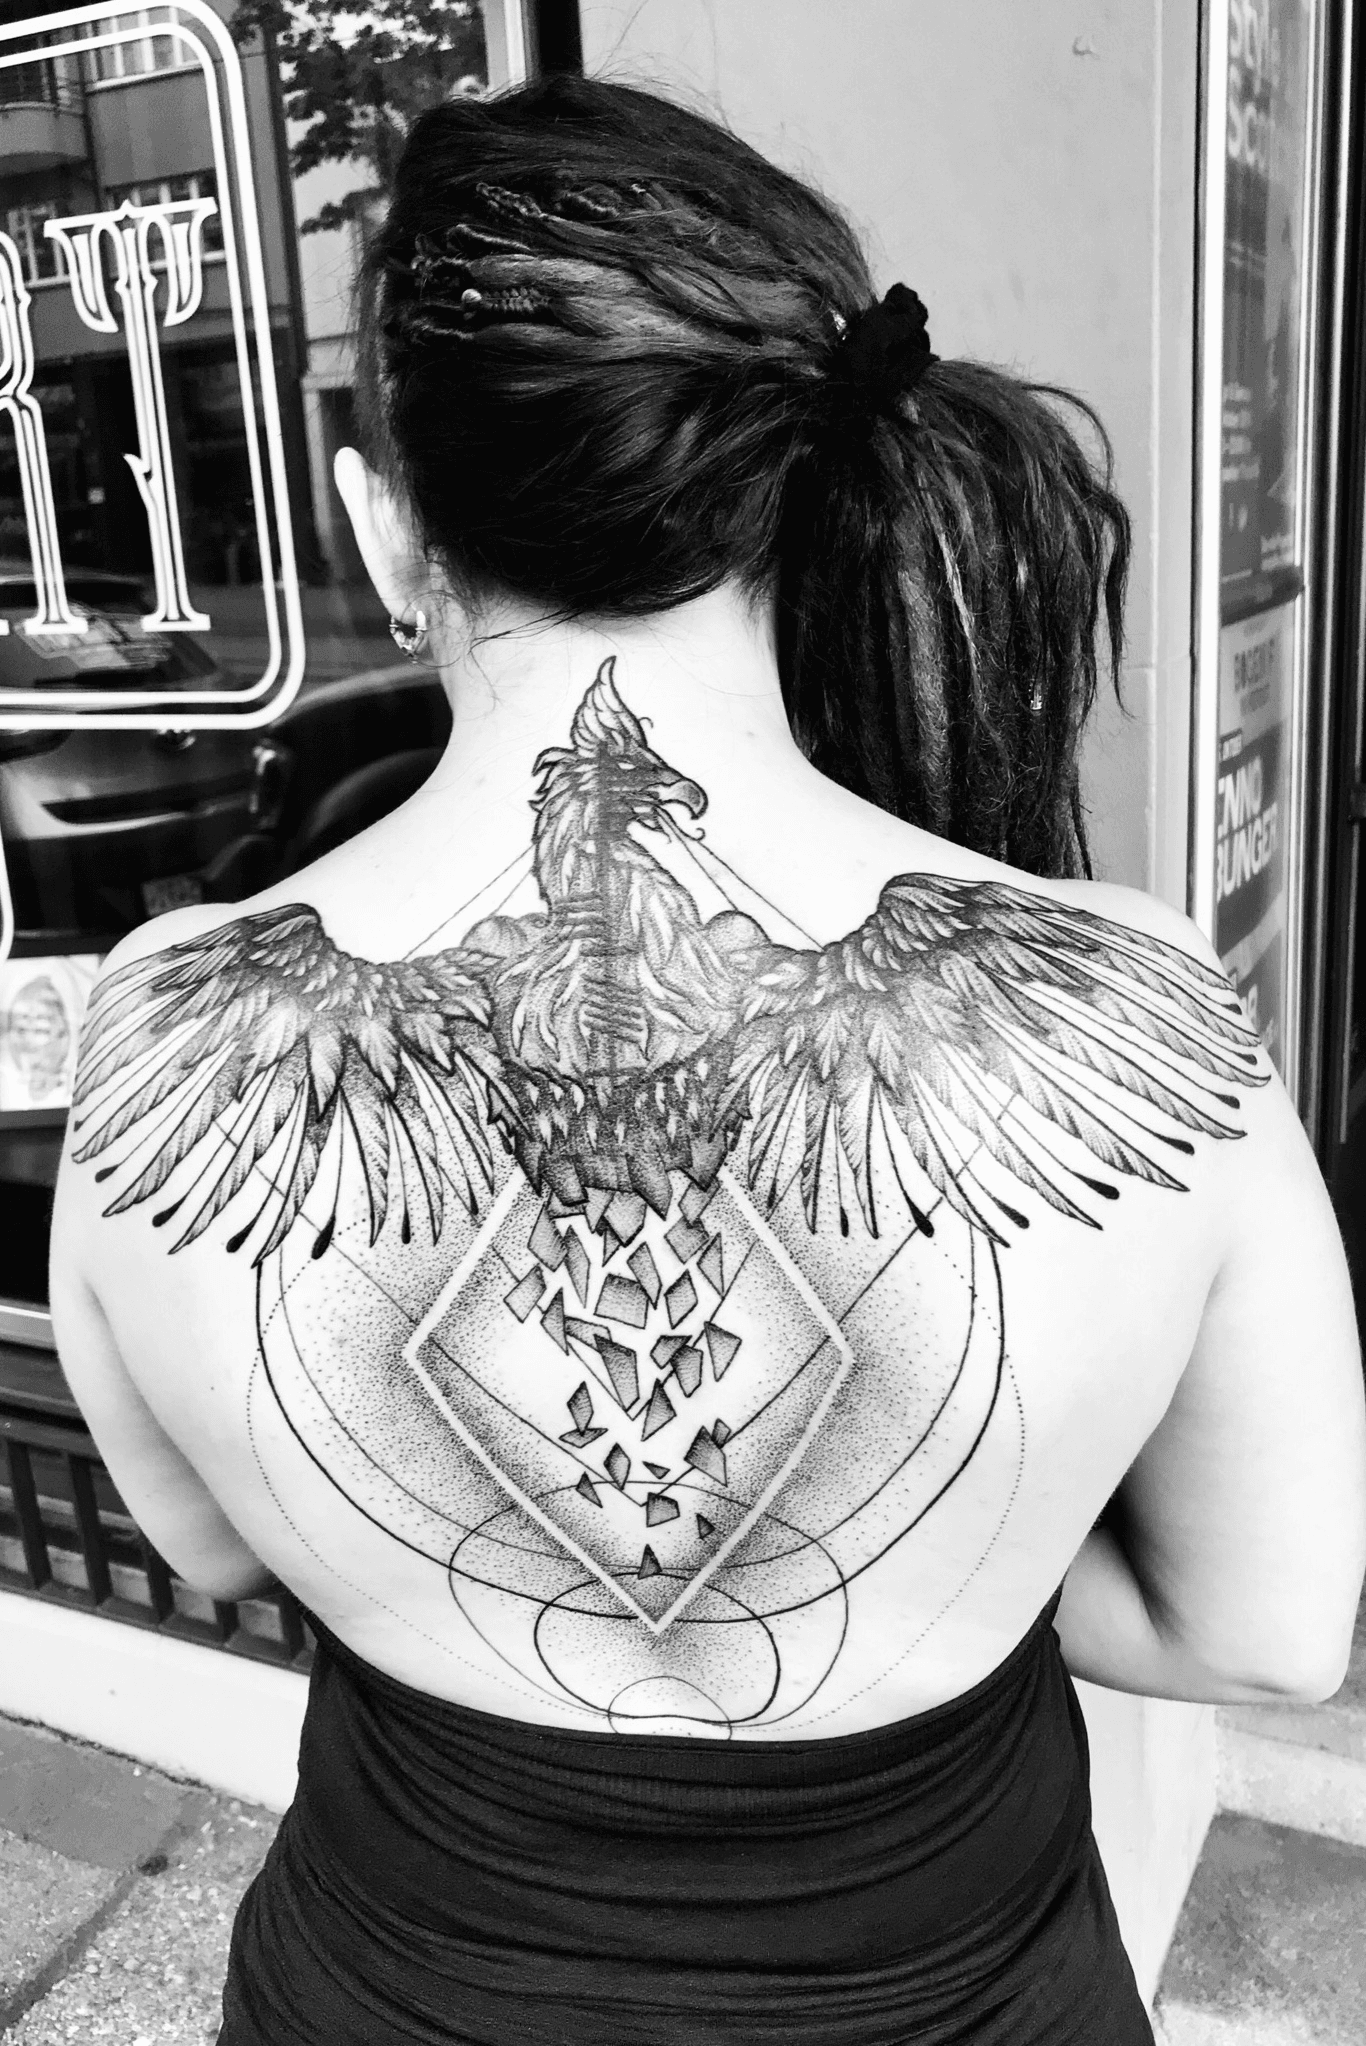 Phoenix Wing  Full Body Tattoo in Progress by Cira Las Vegas  YouTube